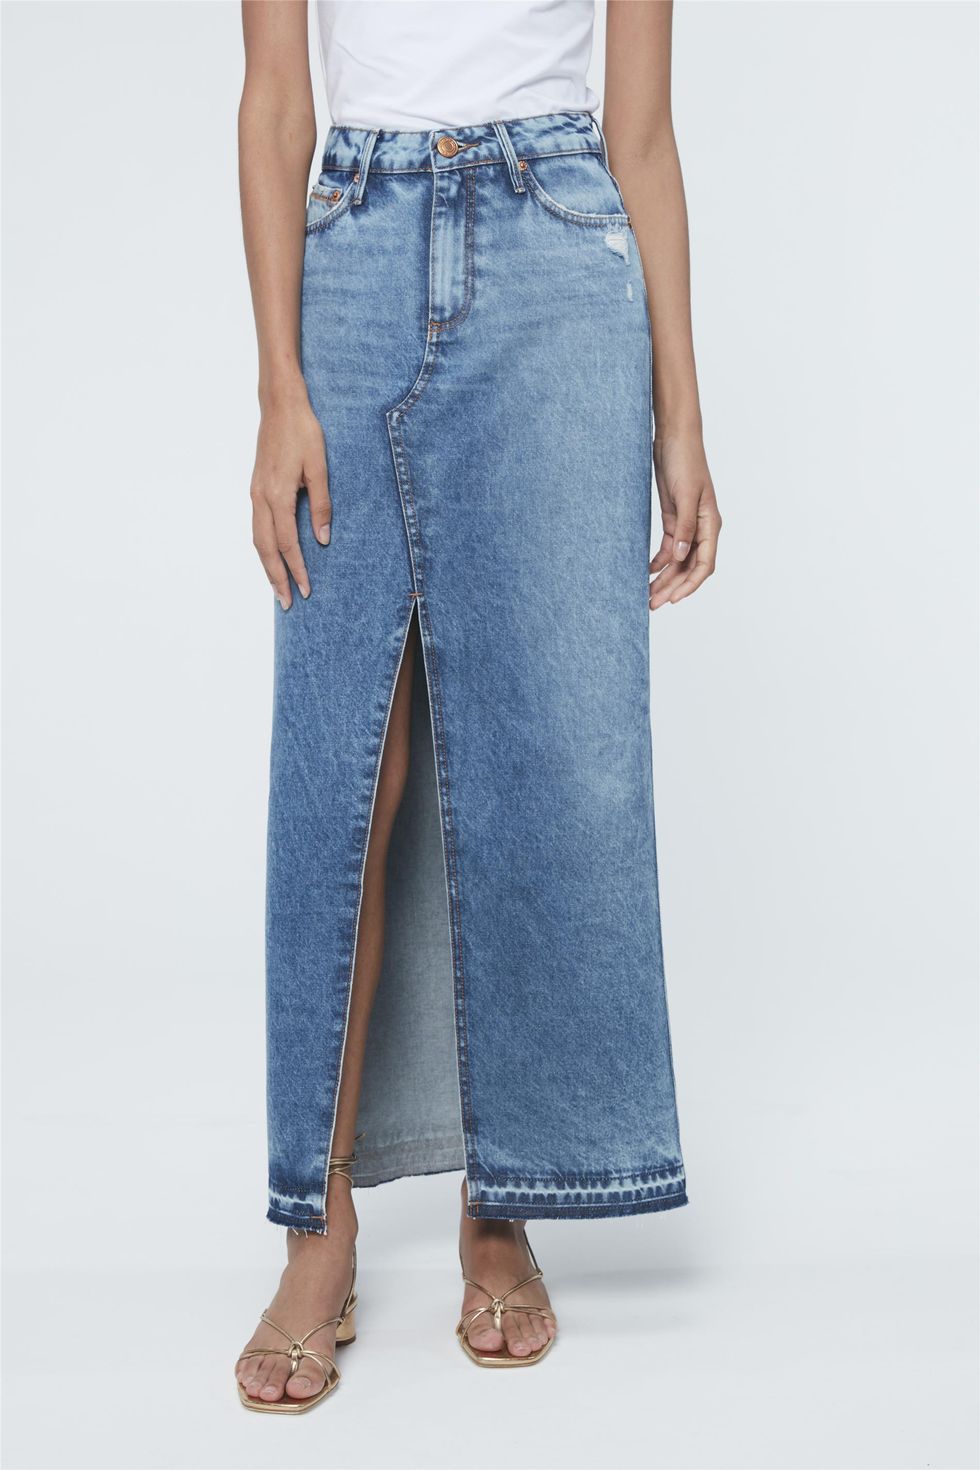 saia jeans longa com abertura na frente